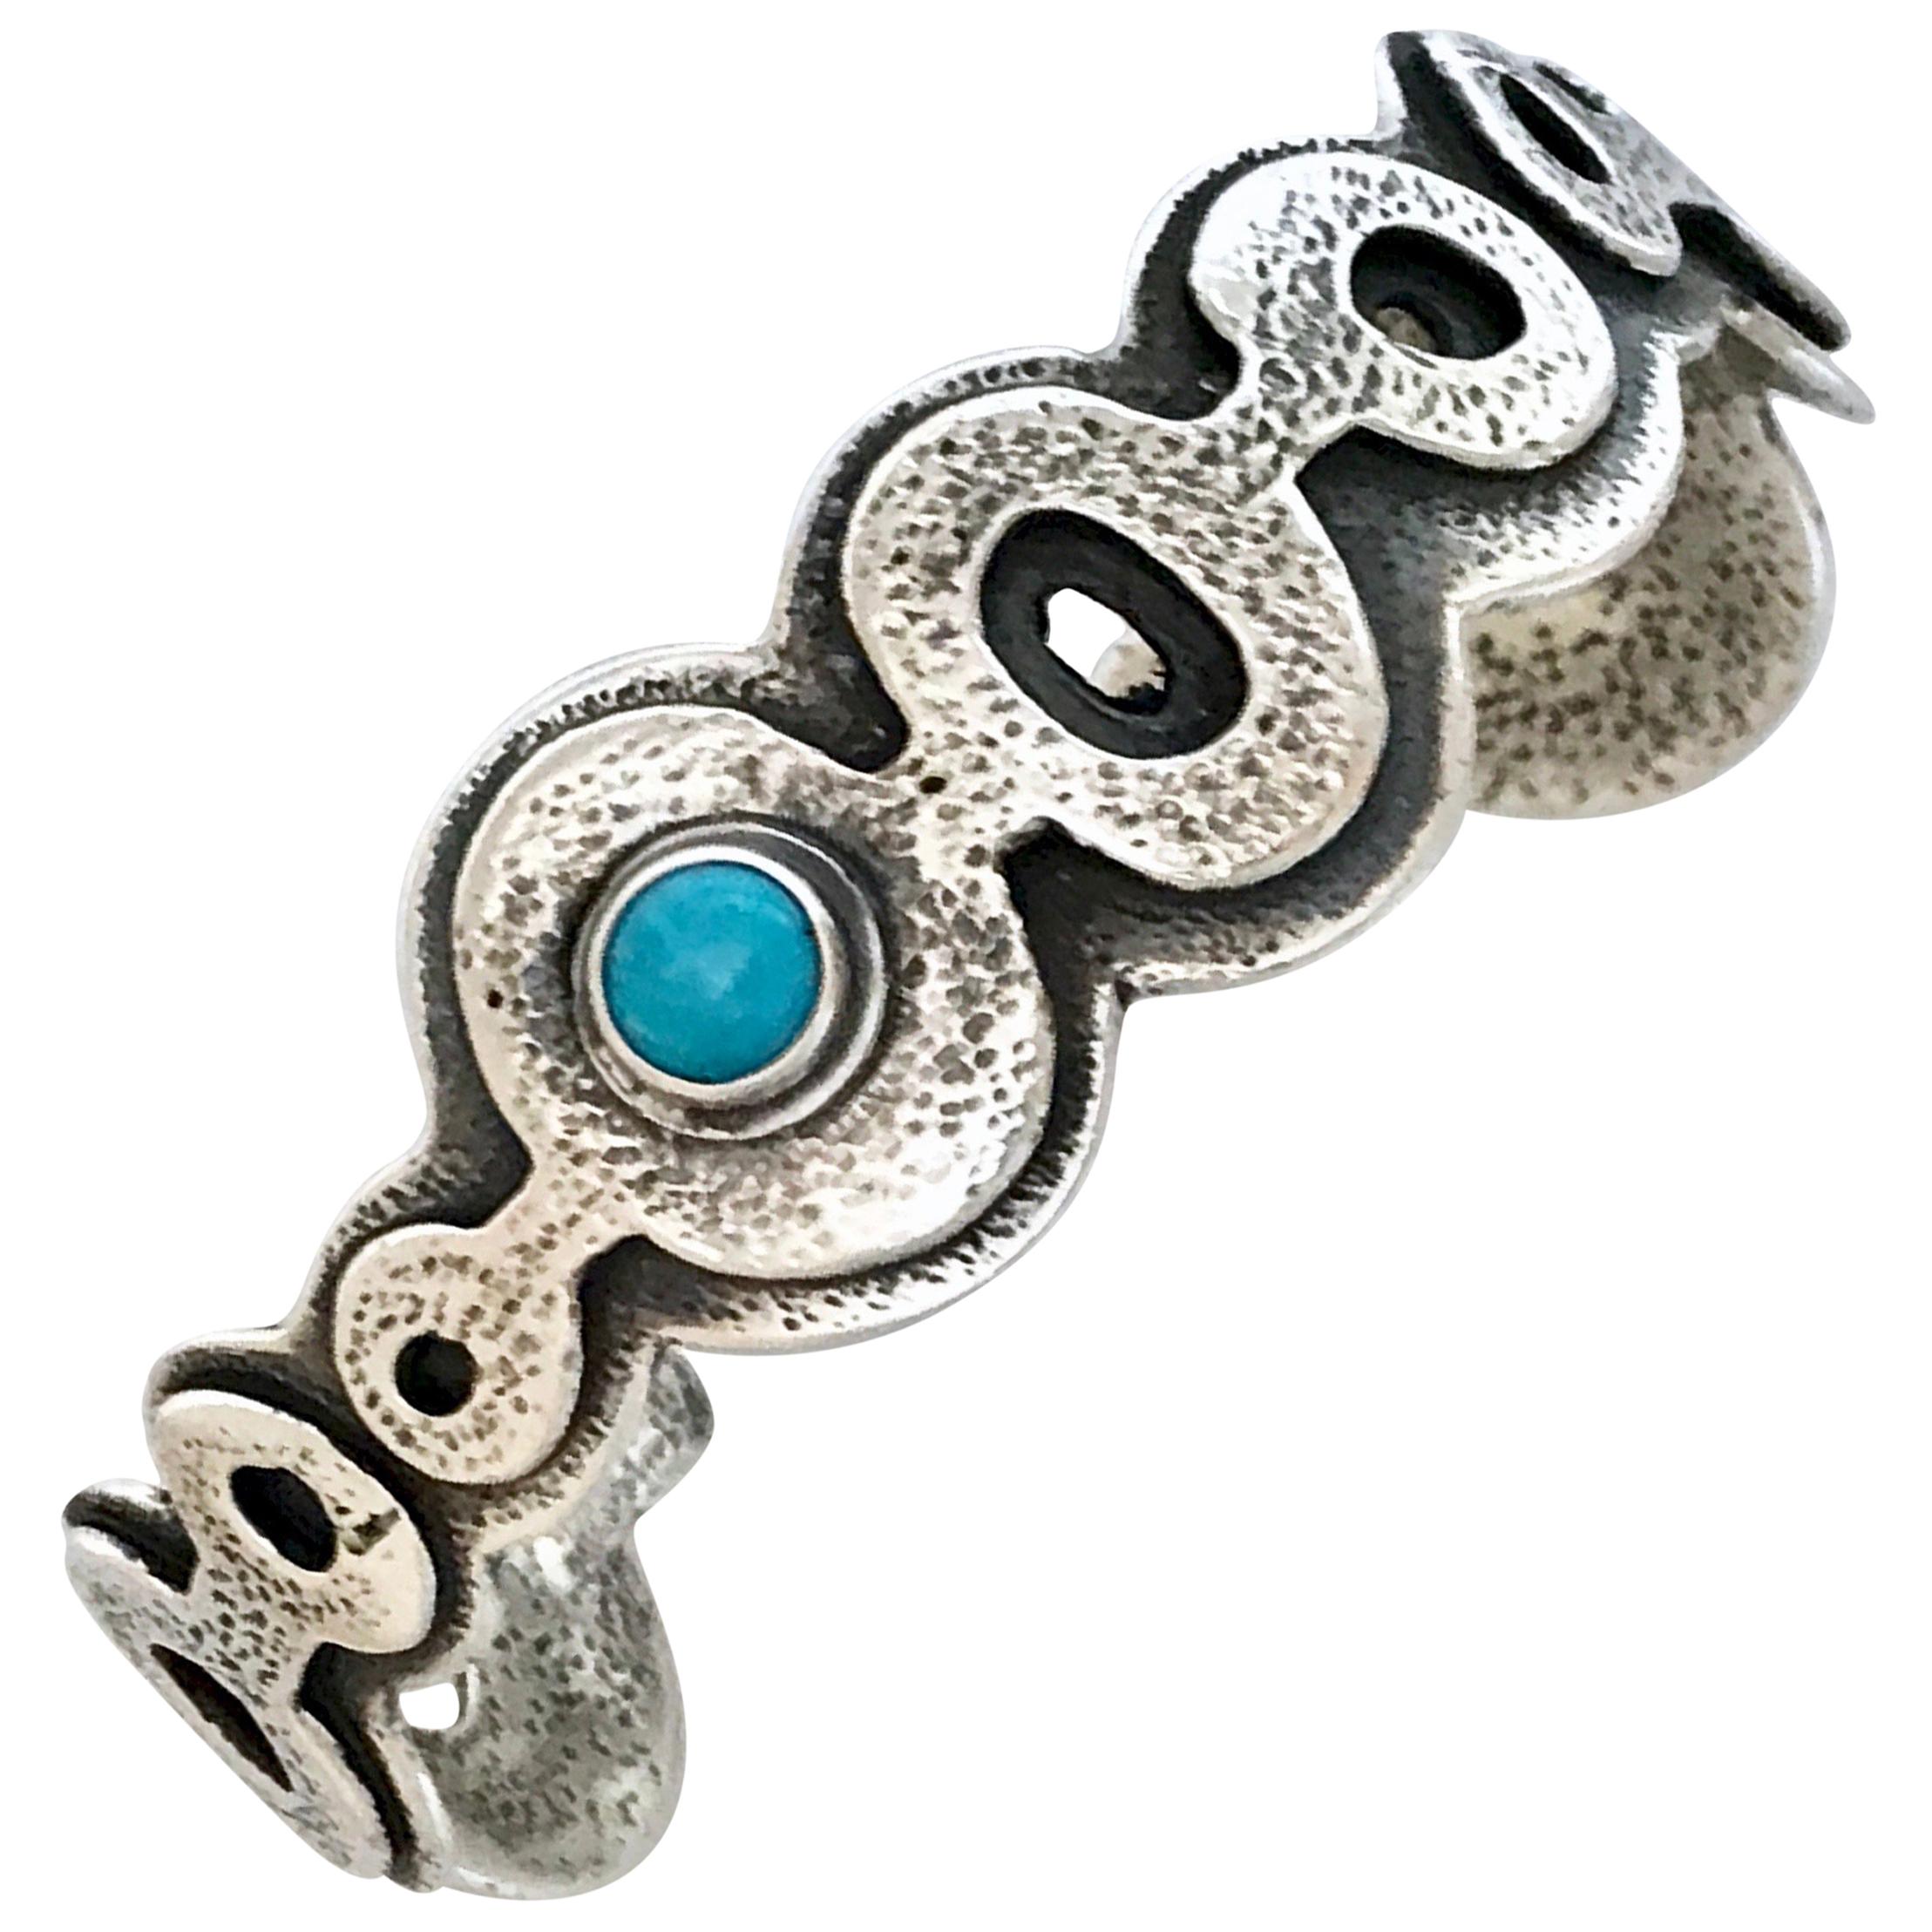 Spirit Pond bracelet with Sleeping Beauty Turquoise Melanie Yazzie silver